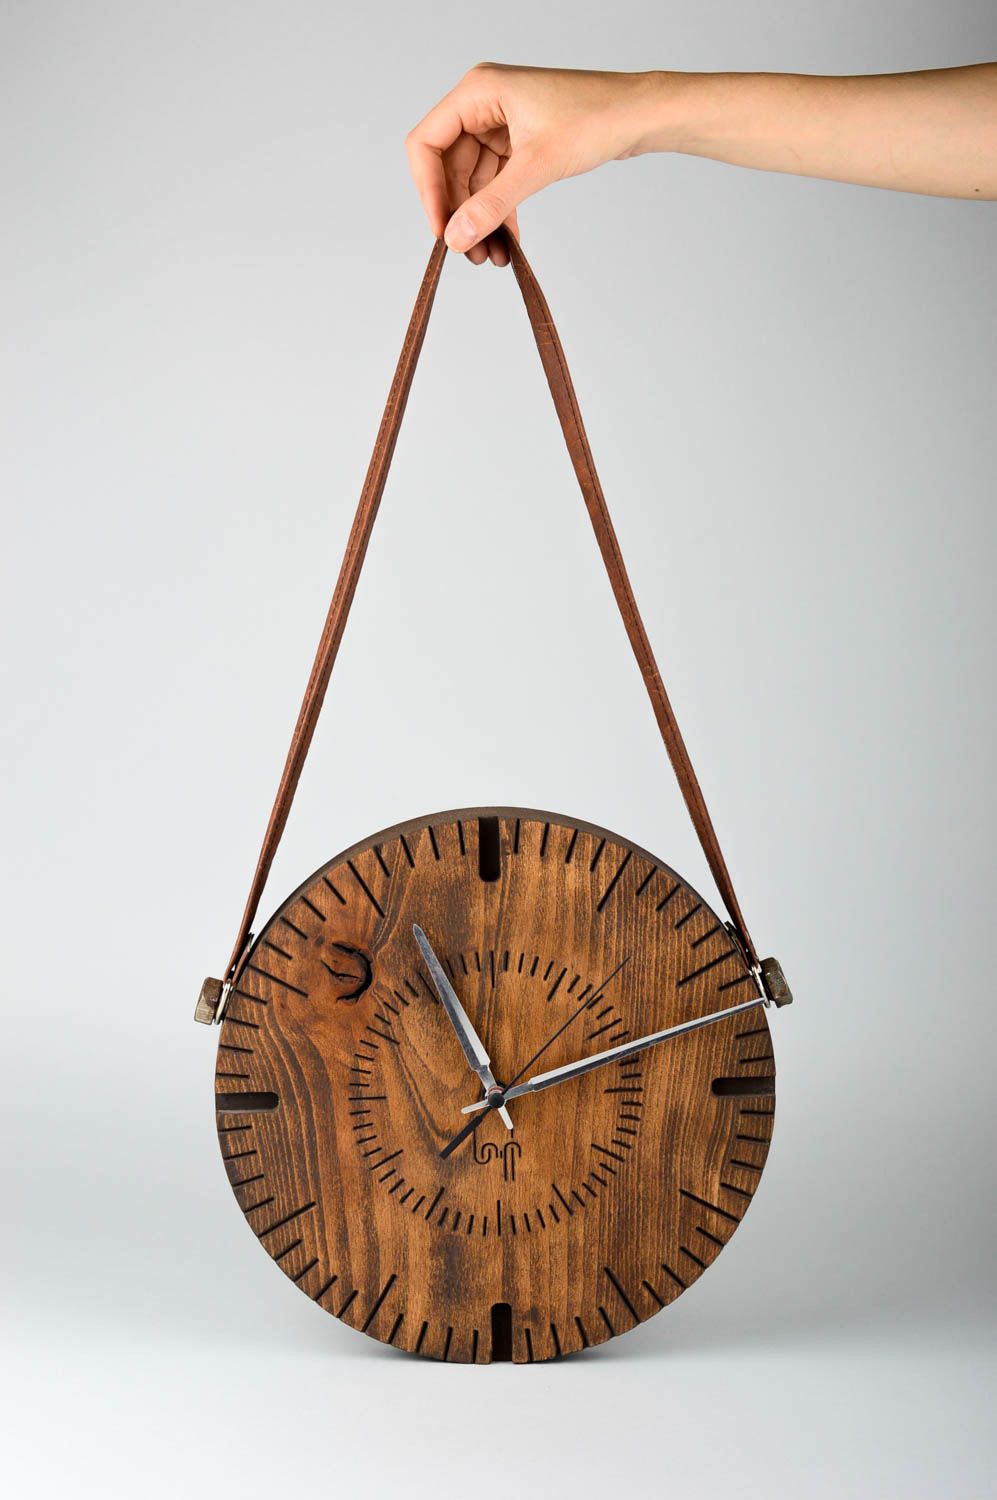 Handmade wooden wall clock designer wall clock housewarming gift idea home decor photo 1